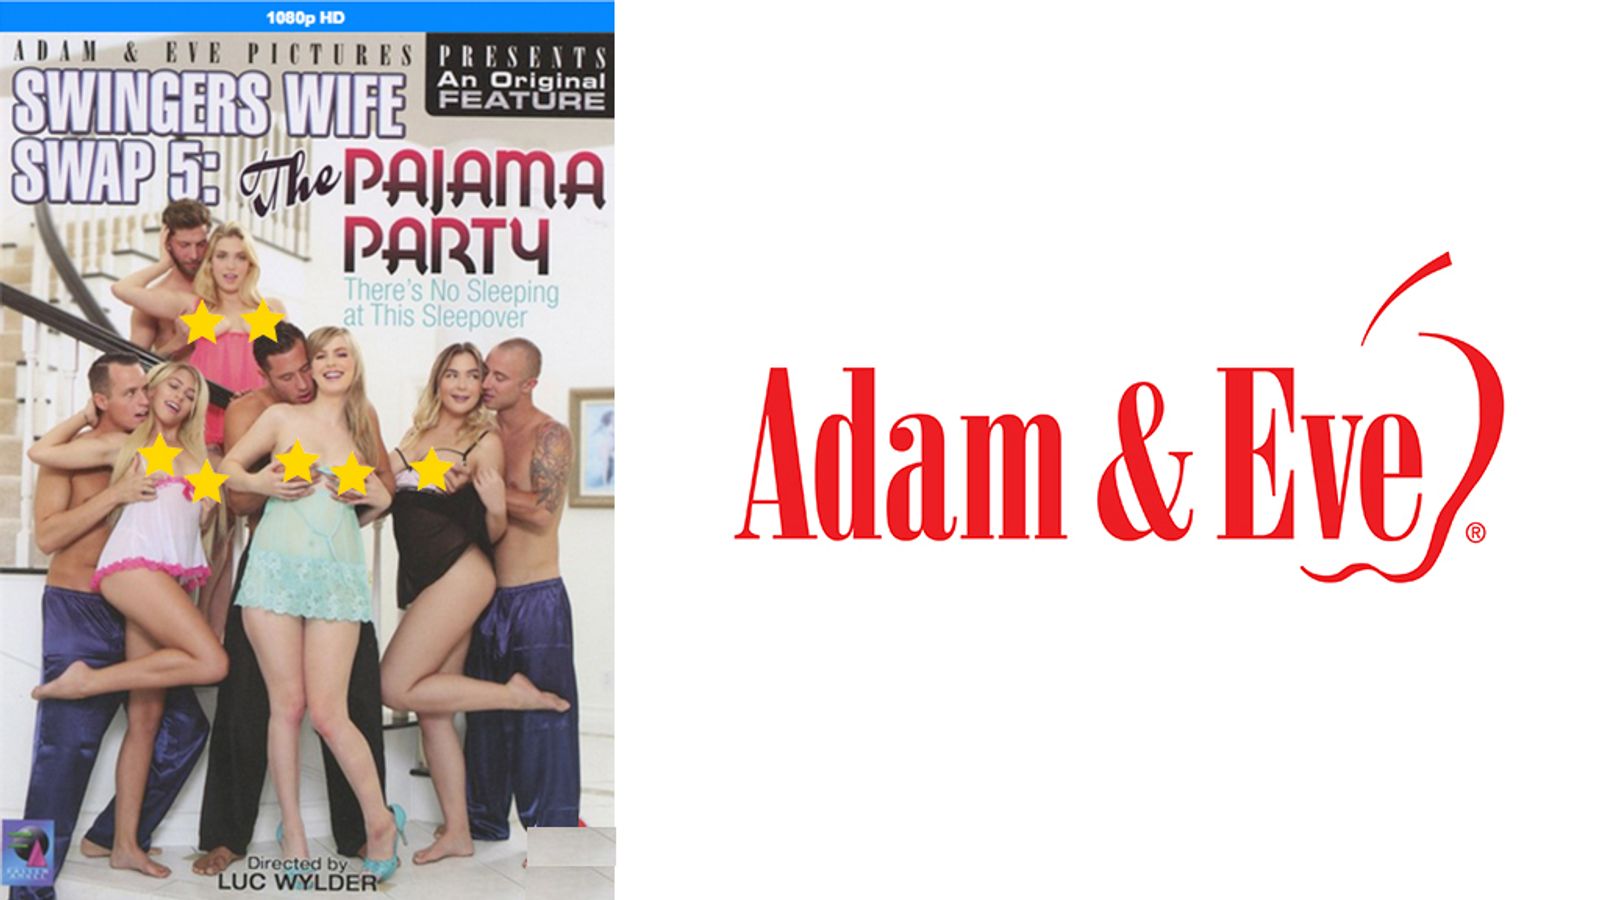 Adam & Eve Streets ‘Swingers Wife Swap 5: The Pajama Party’